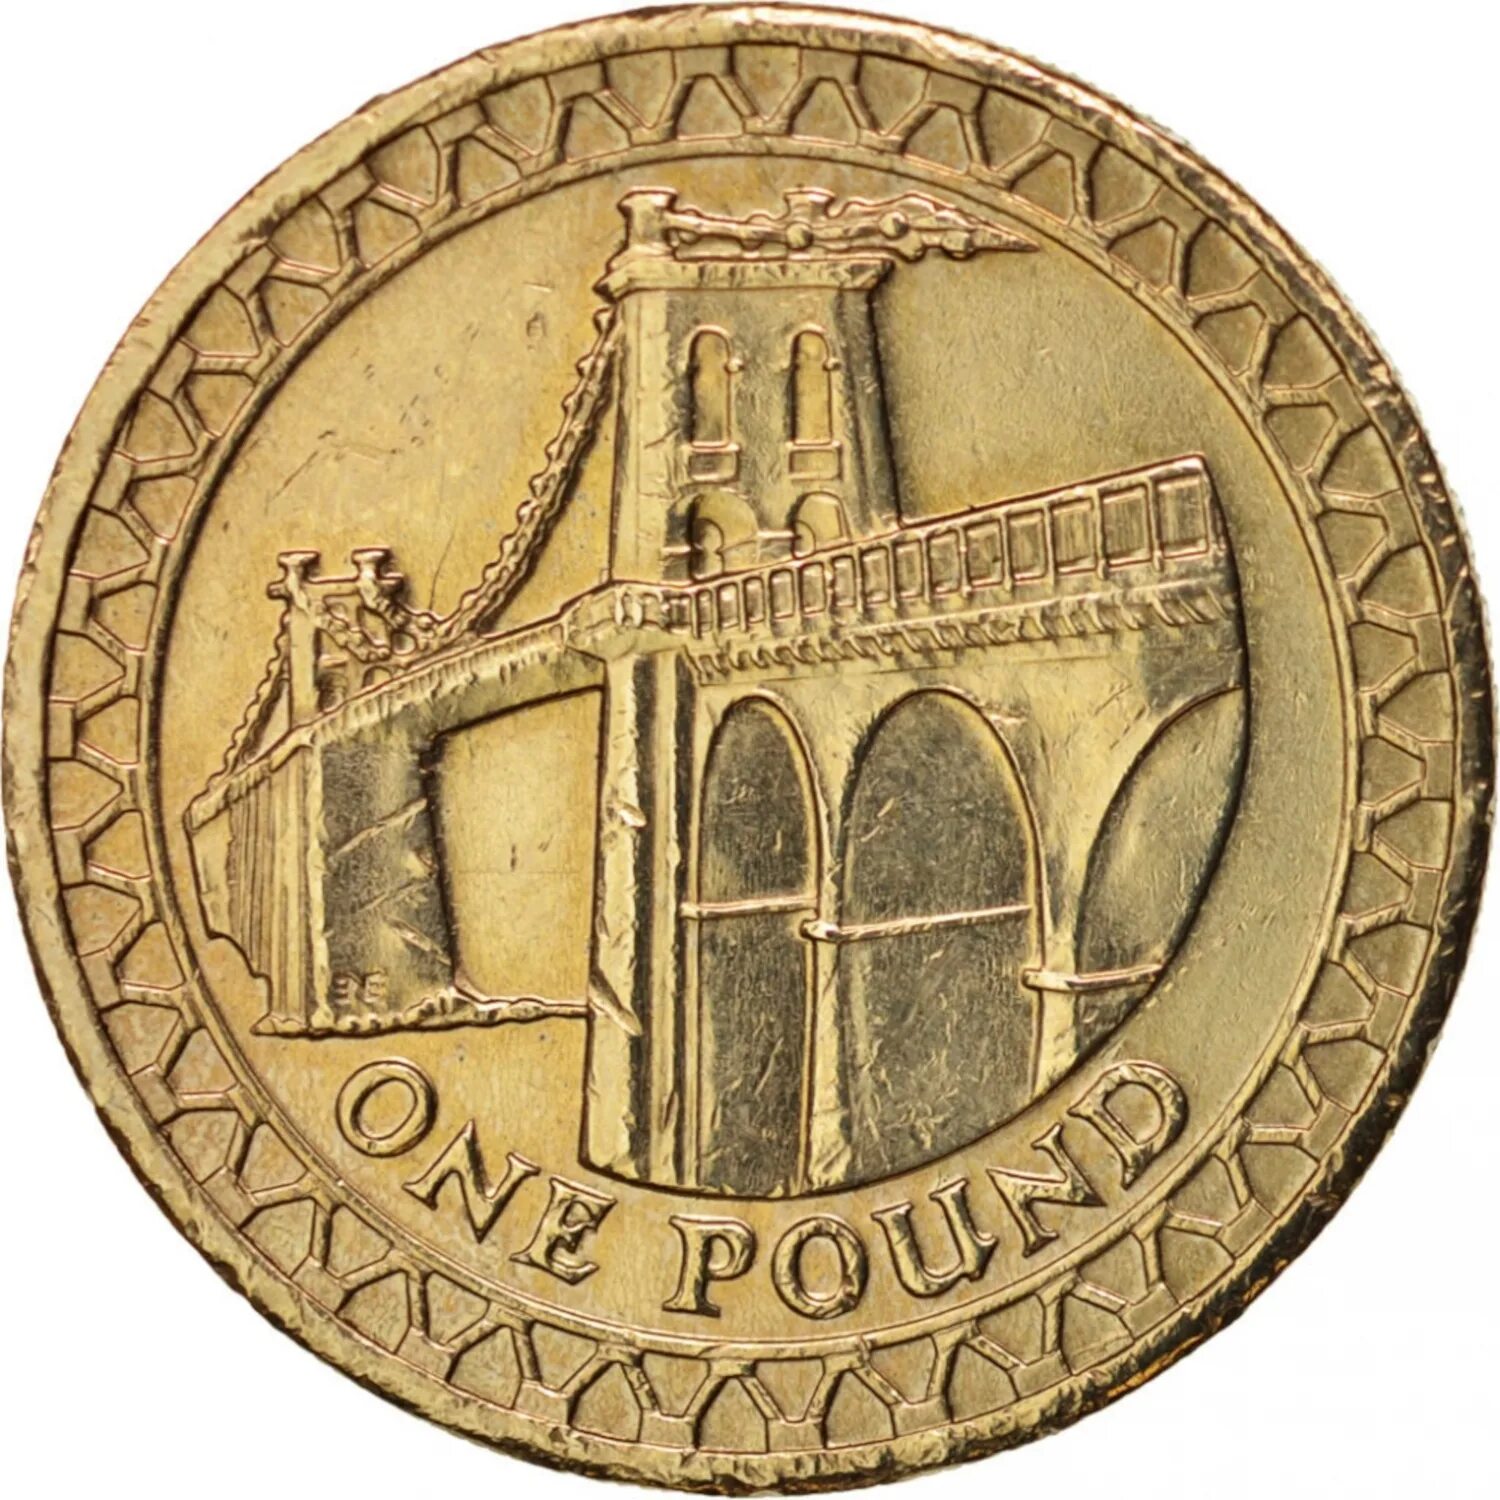 First coins. 1 Фунт Великобритания. Монета 1 Паунд. Британия 1 фунт монета. One pound монета Британии 2005.